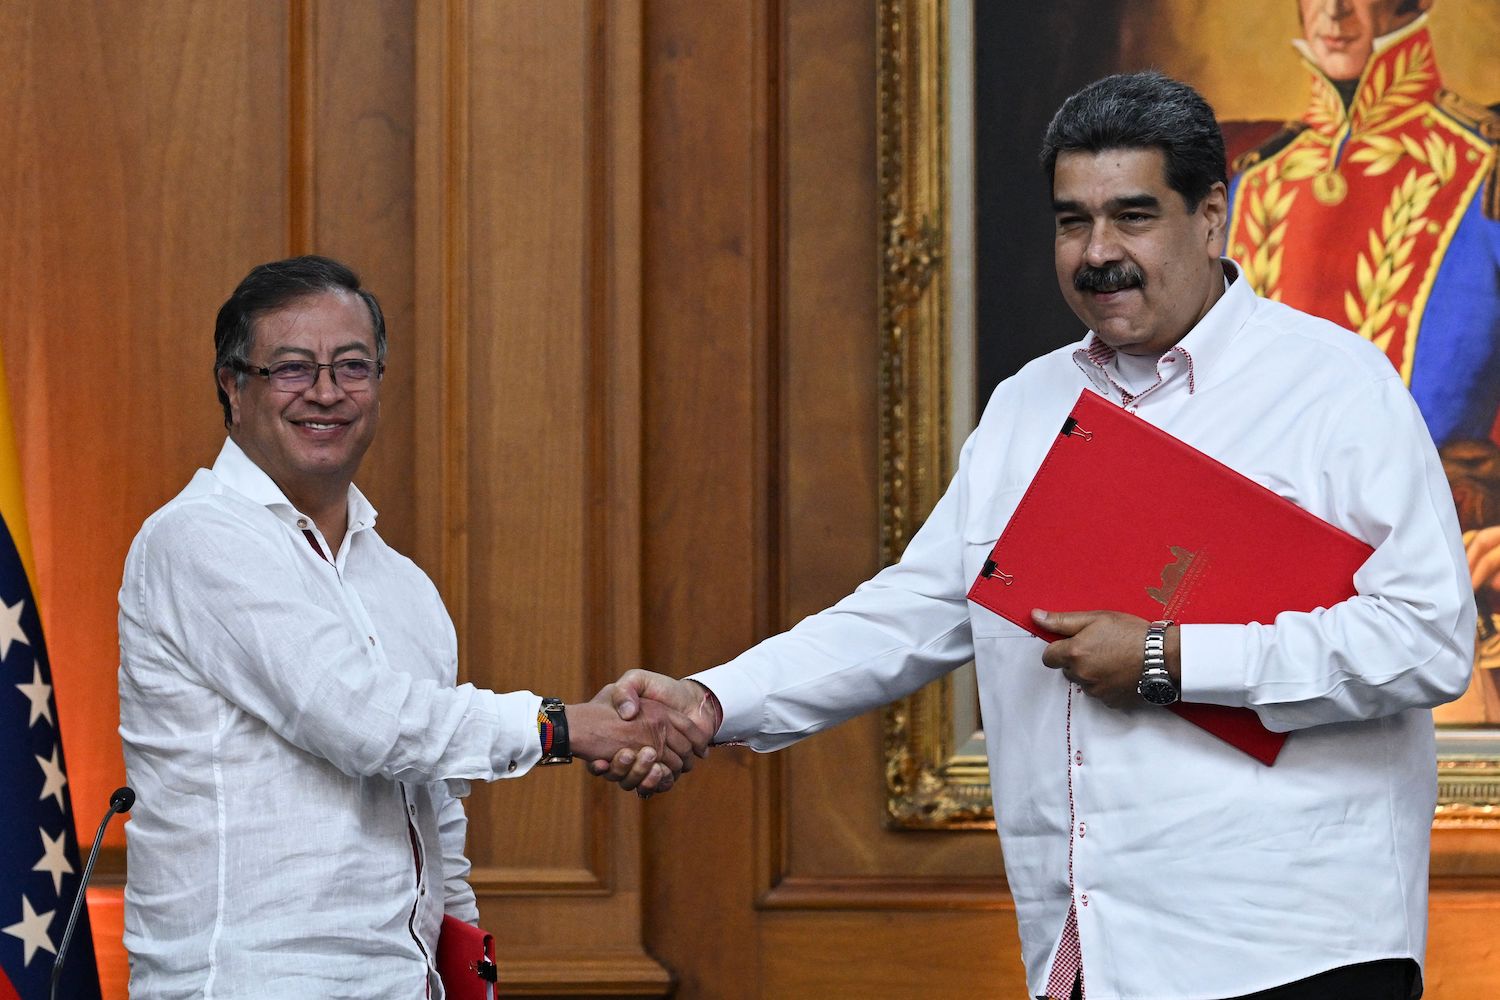 Venezuelan-Colombian Relations at World Politics Review